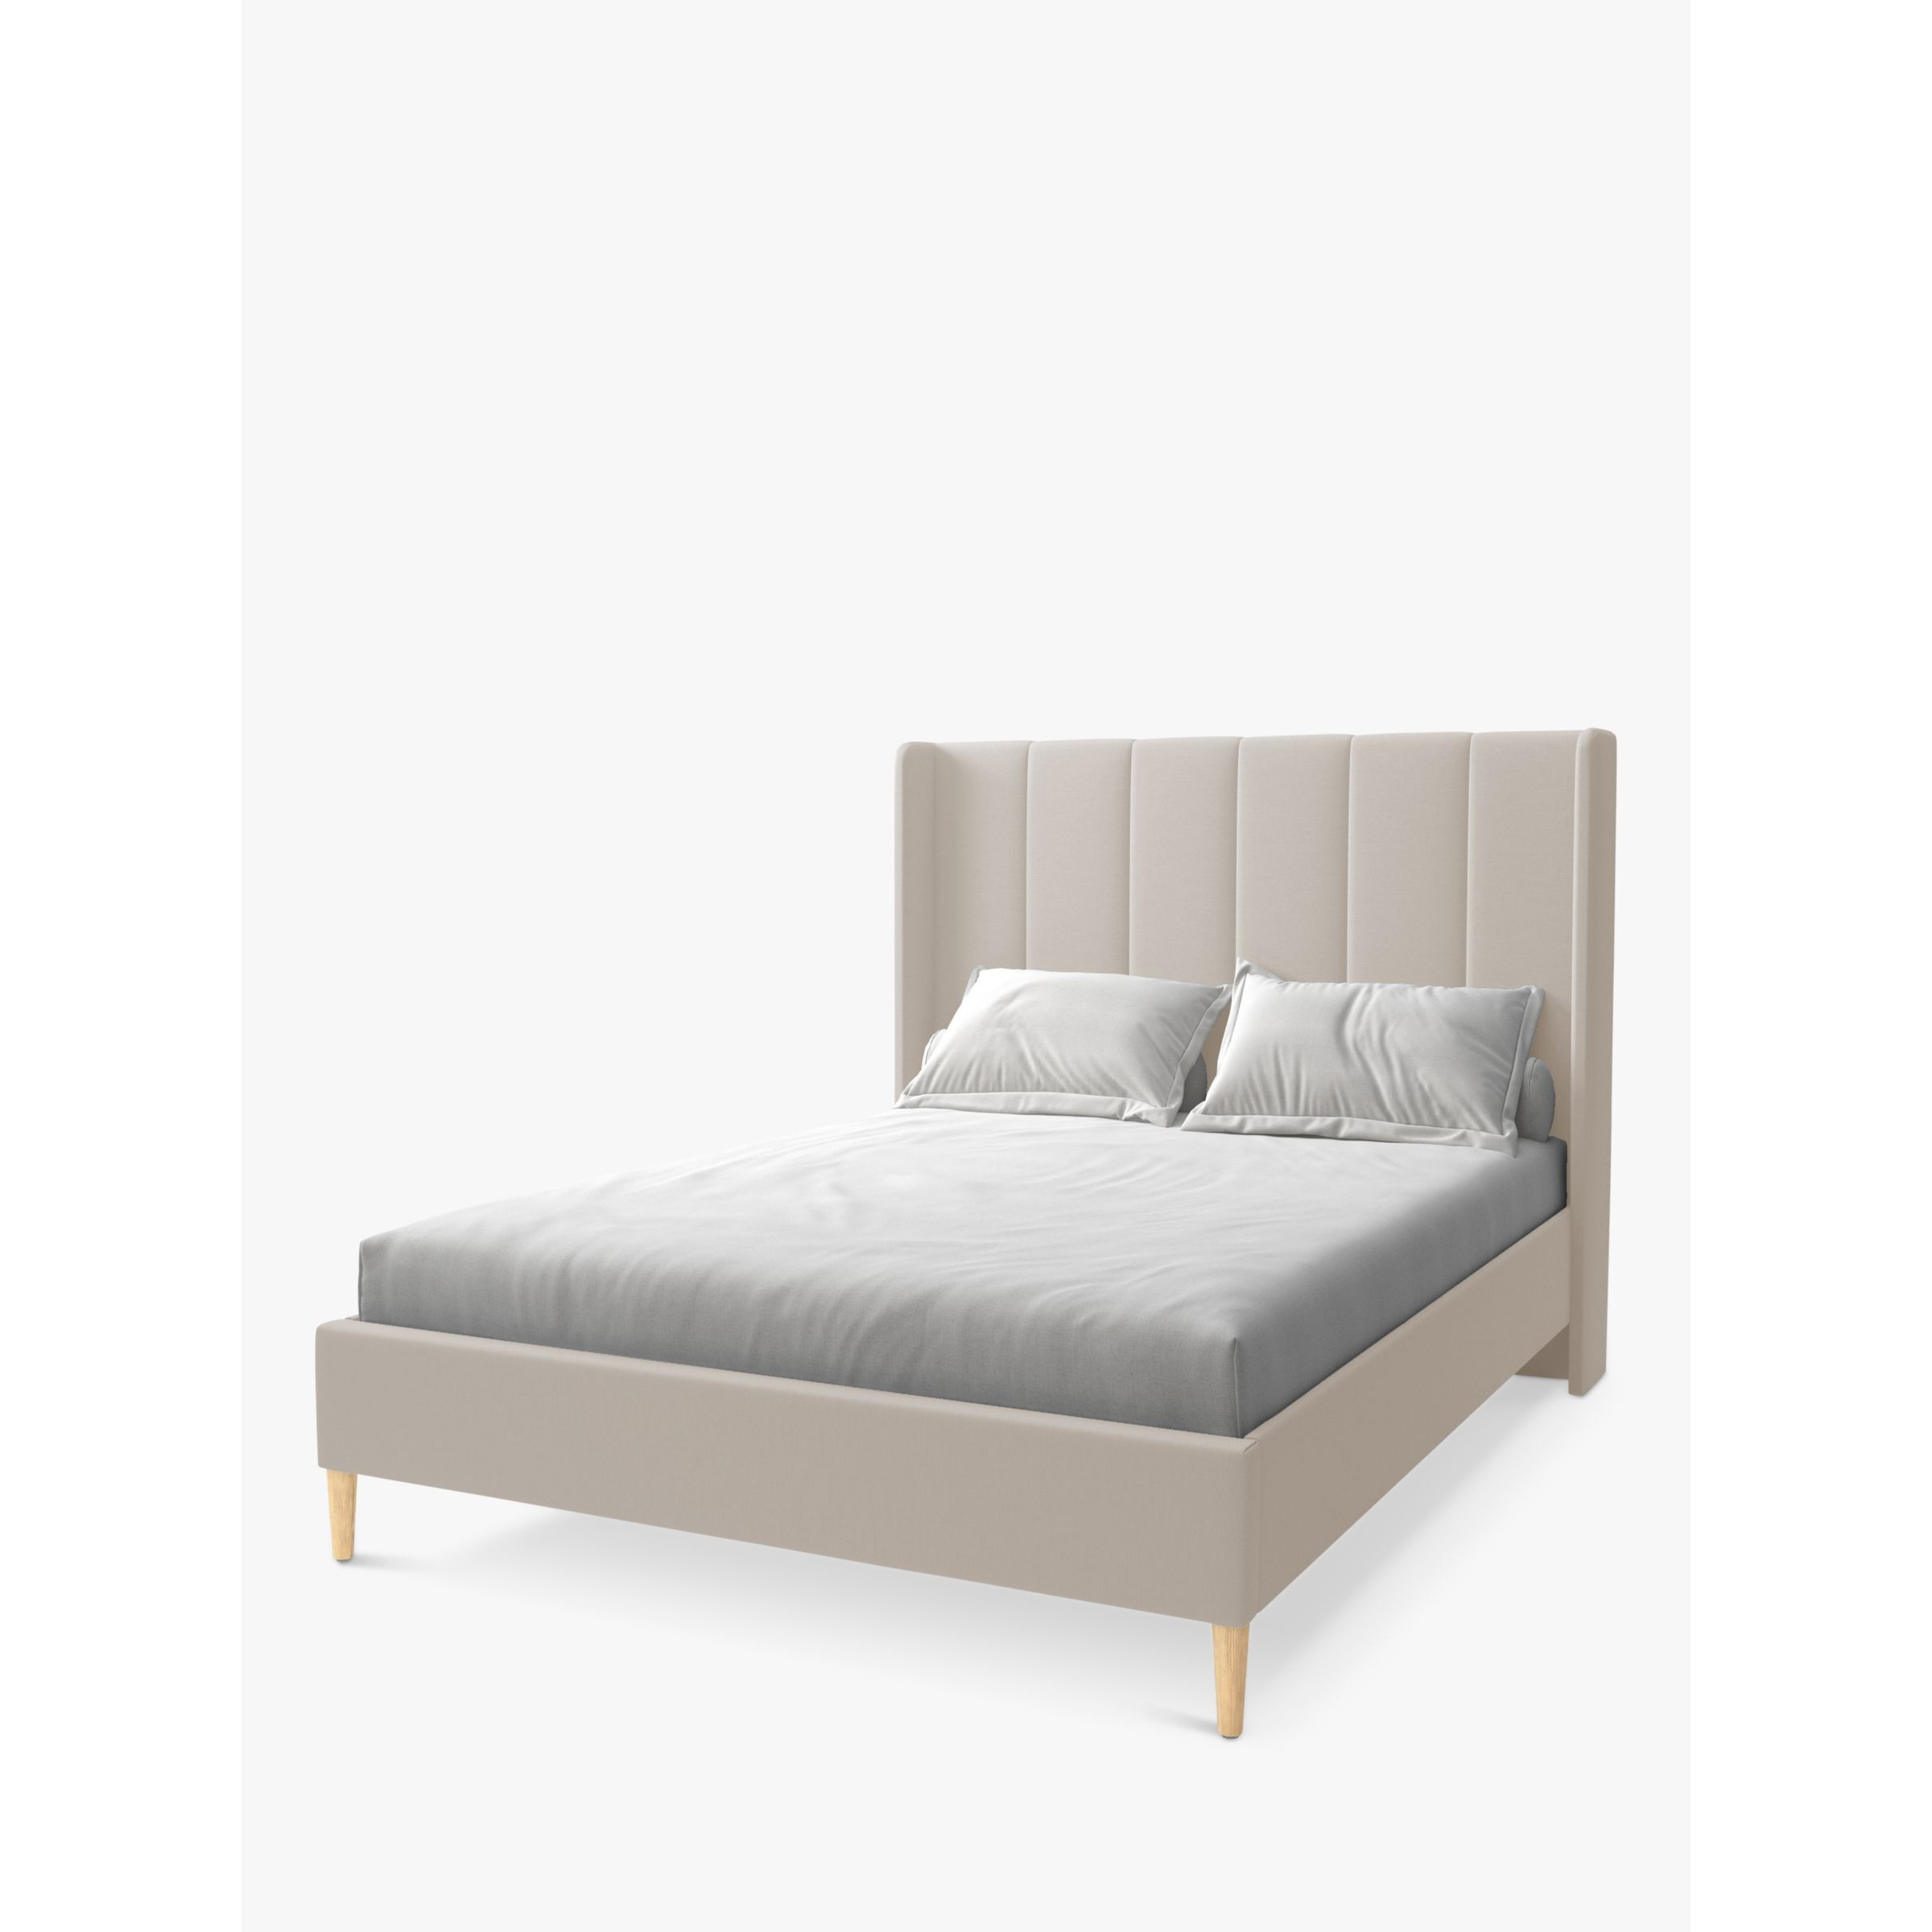 Koti Home Adur Upholstered Bed Frame, Double - image 1